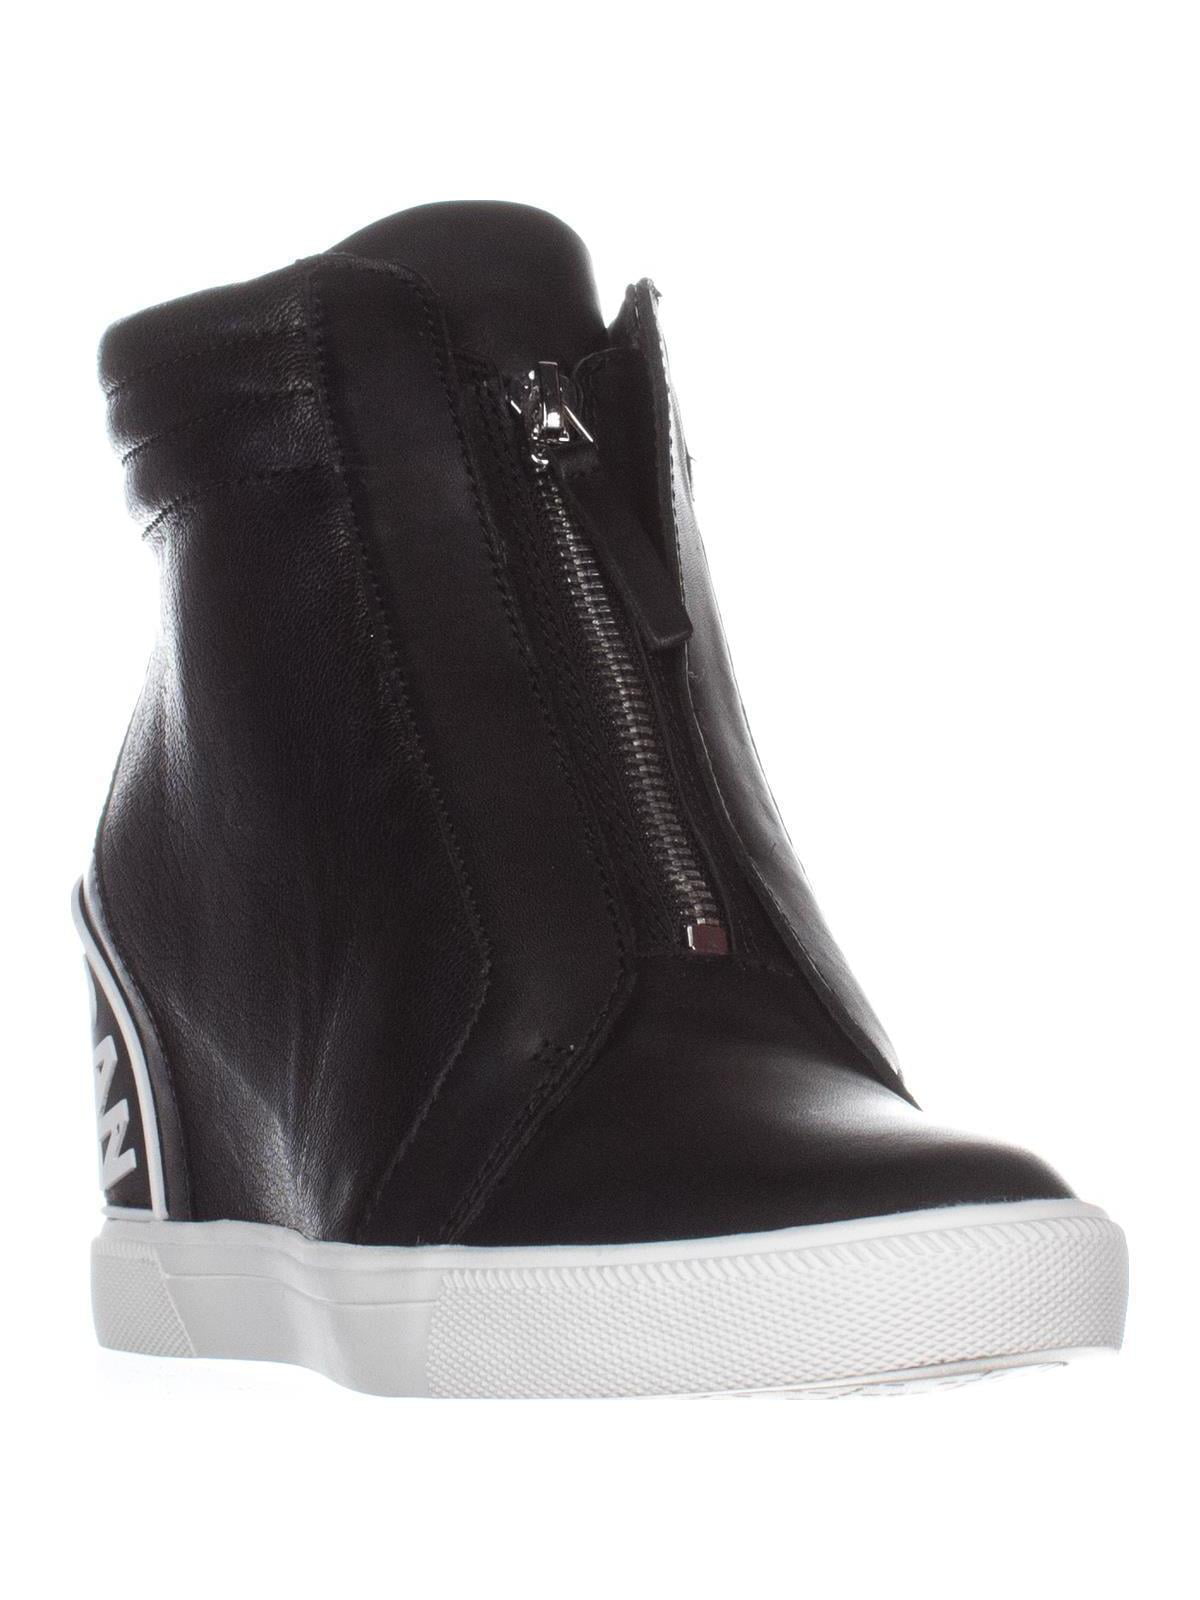 Womens DKNY Connie Fashion Wedge Sneakers, Black Leather - Walmart.com